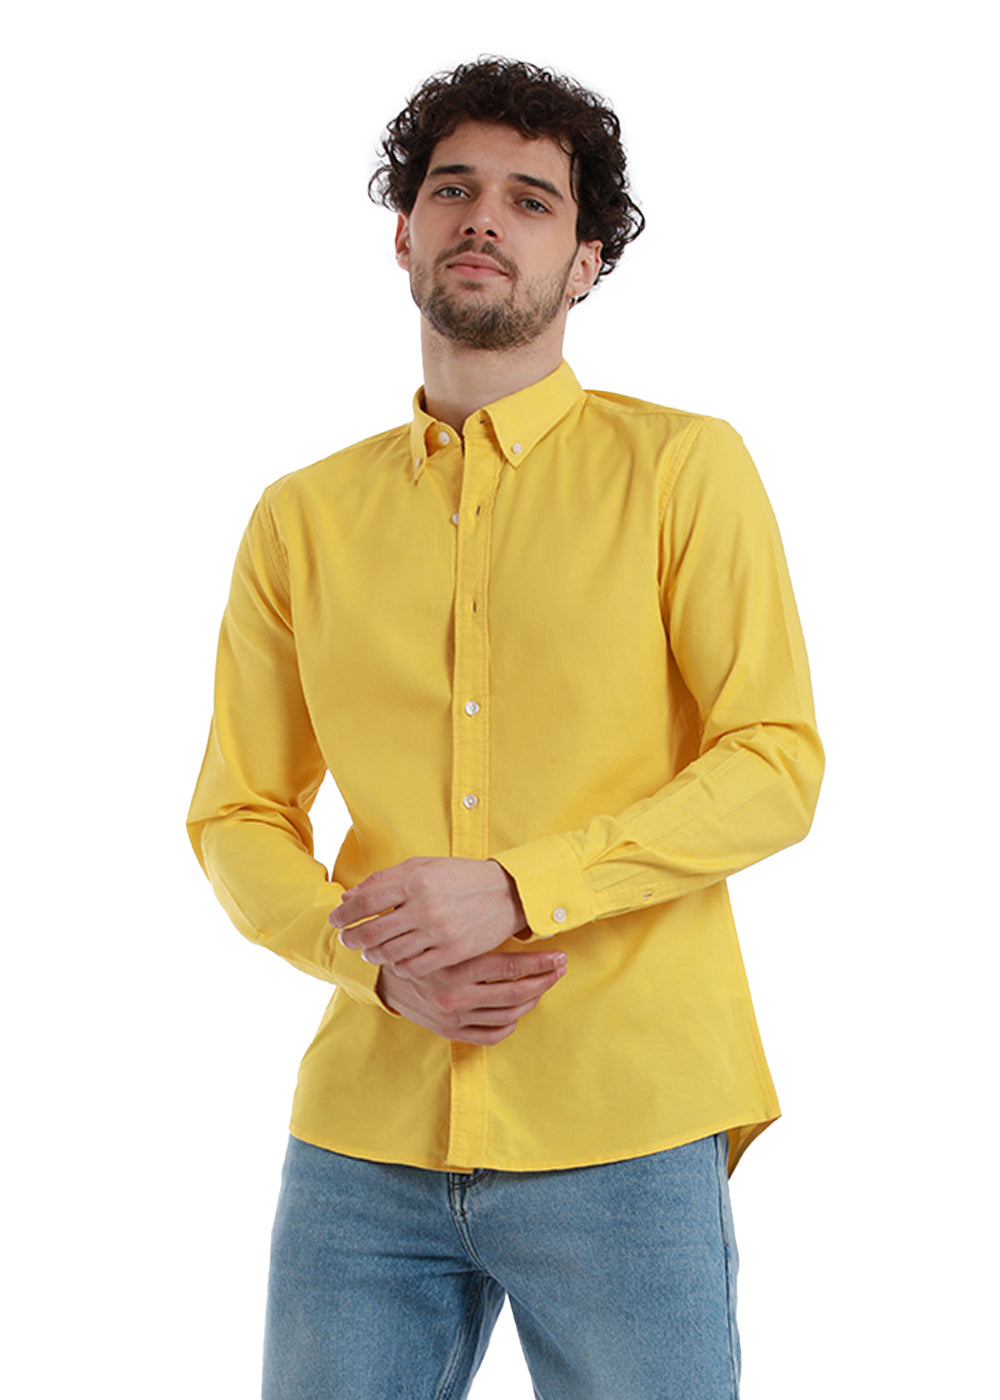 Vibrant Yellow Oxford Shirt